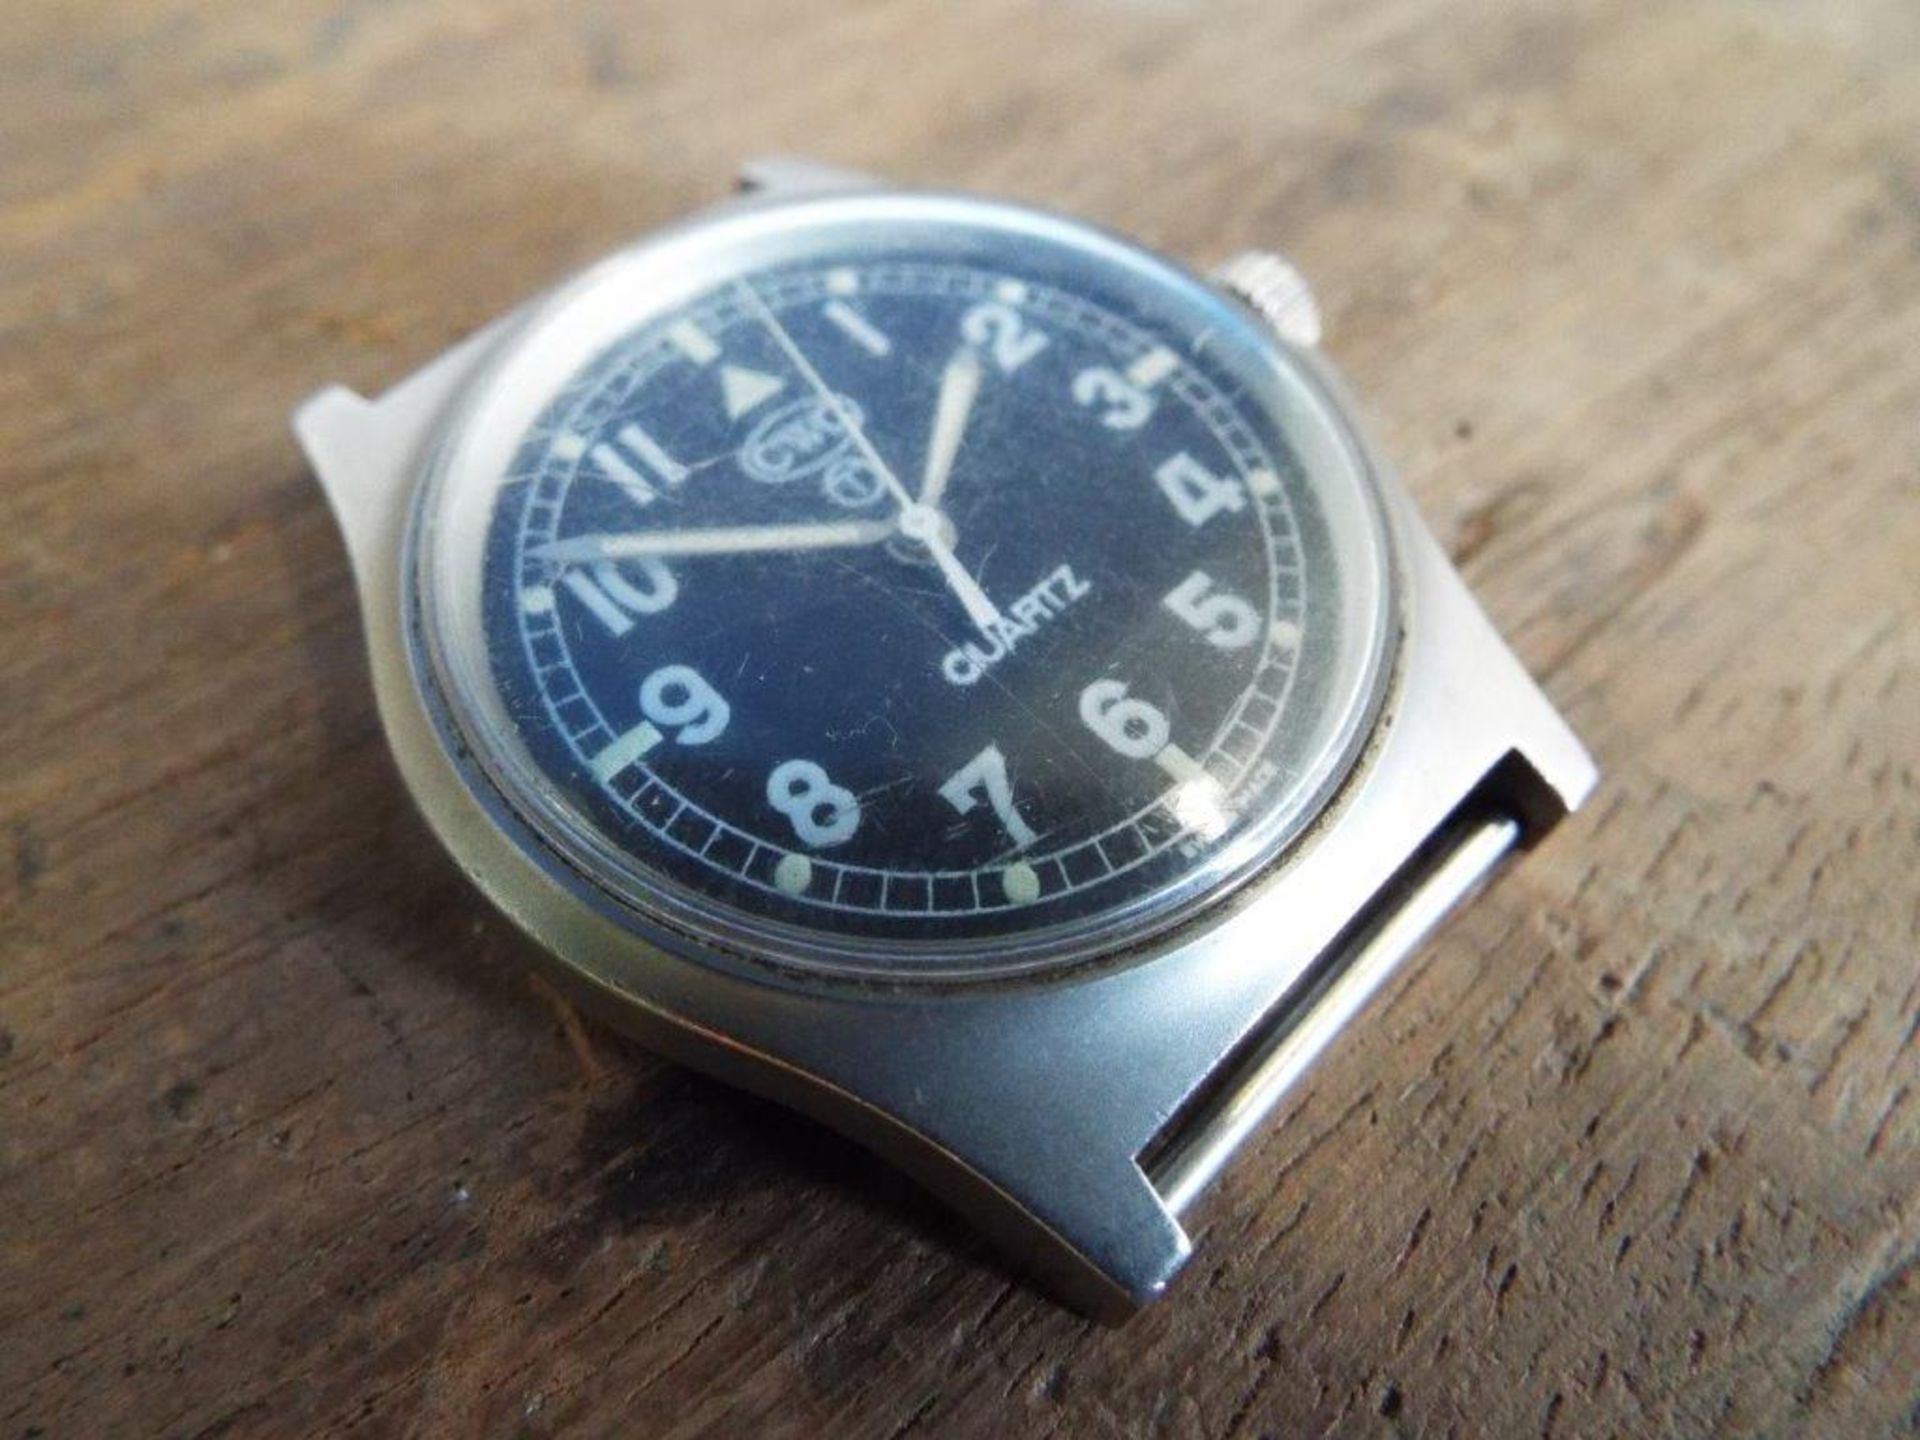 Genuine British Army CWC Quartz Wrist Watch - Image 2 of 5